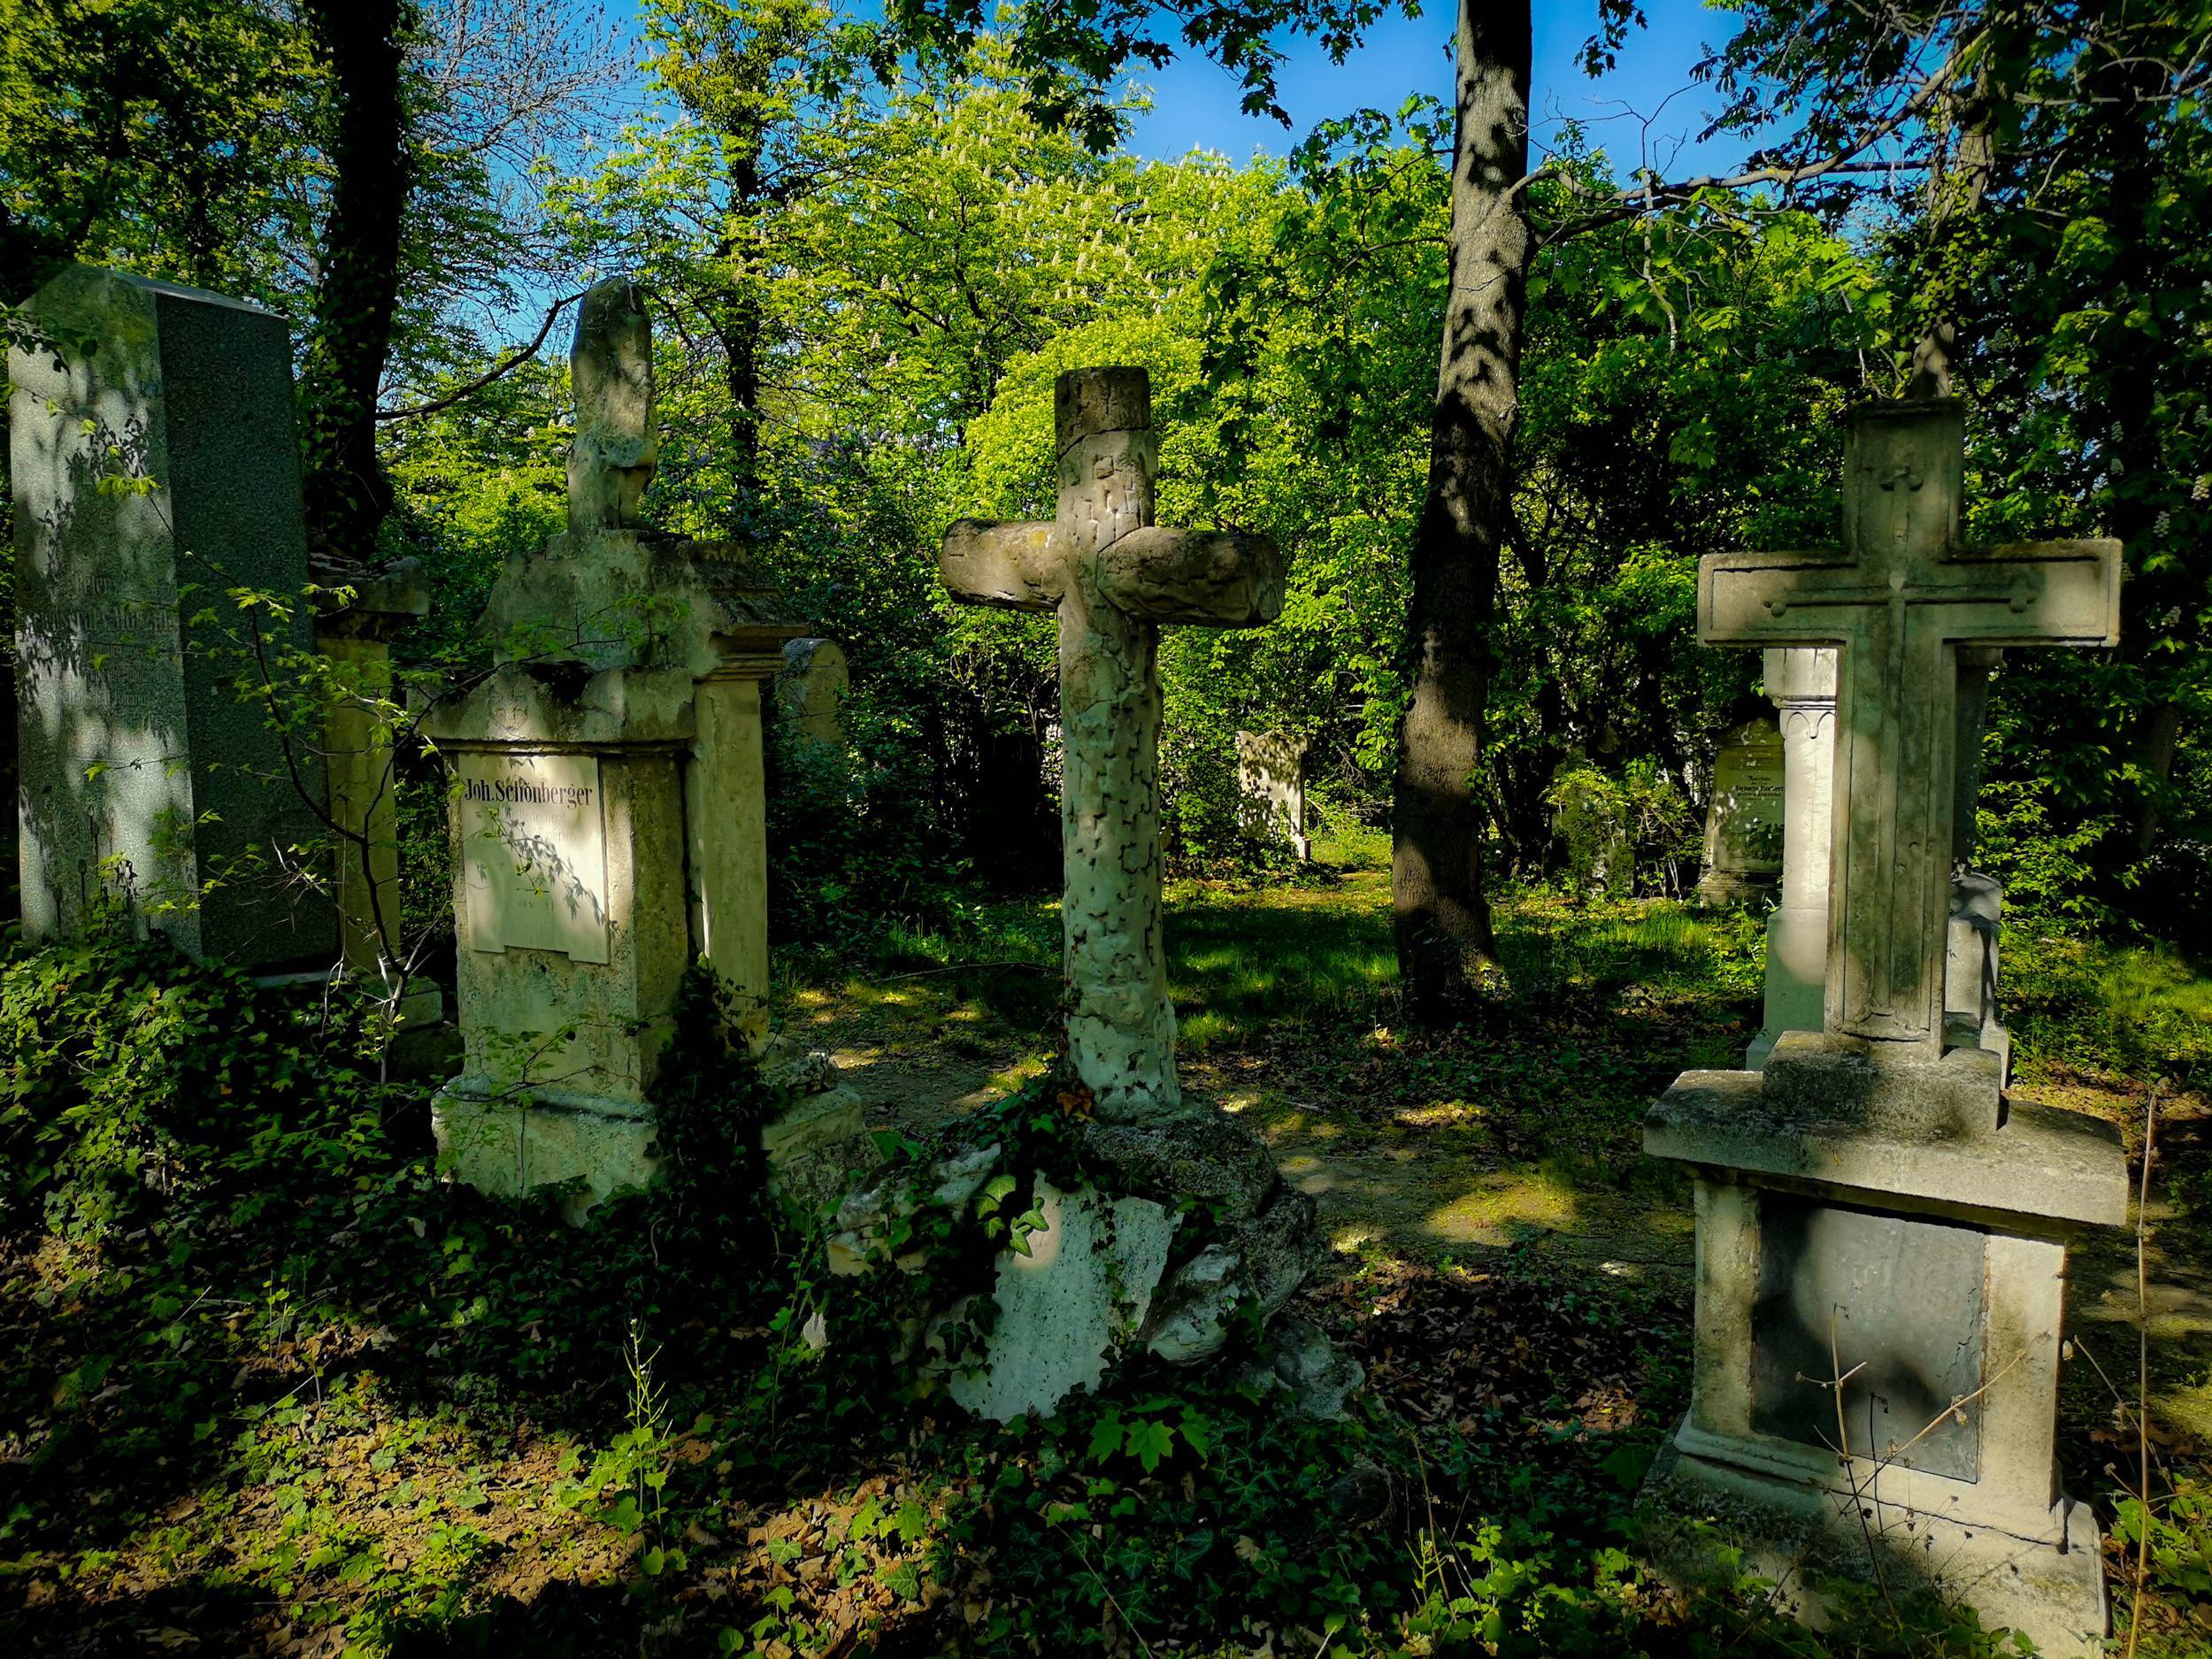 Overgrown graves in St Marx Cemetery, Vienna